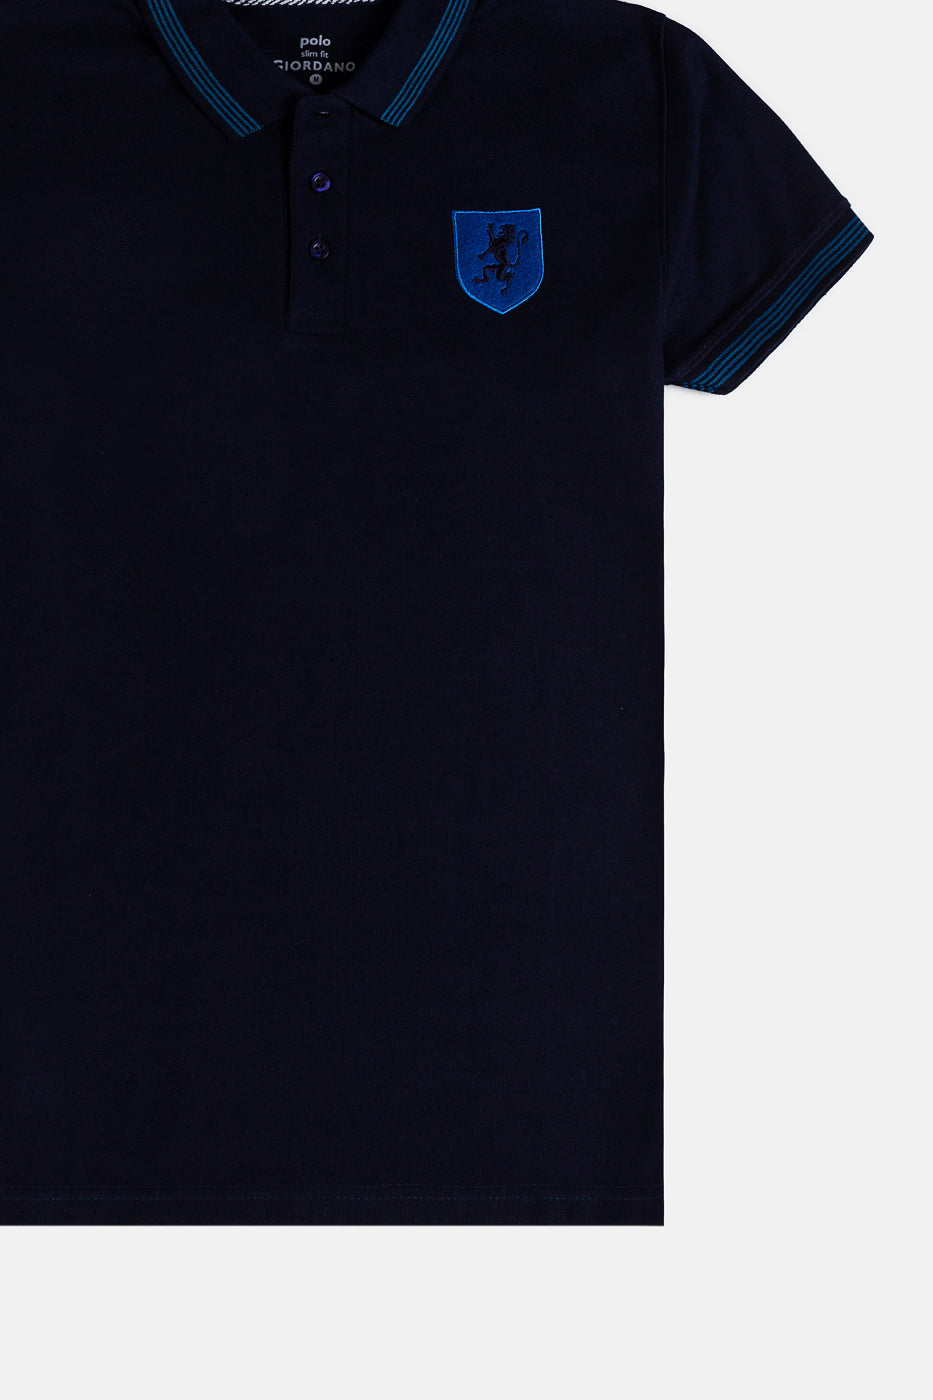 GRDNO Premium Imported Polo Shirt - Navy Blue